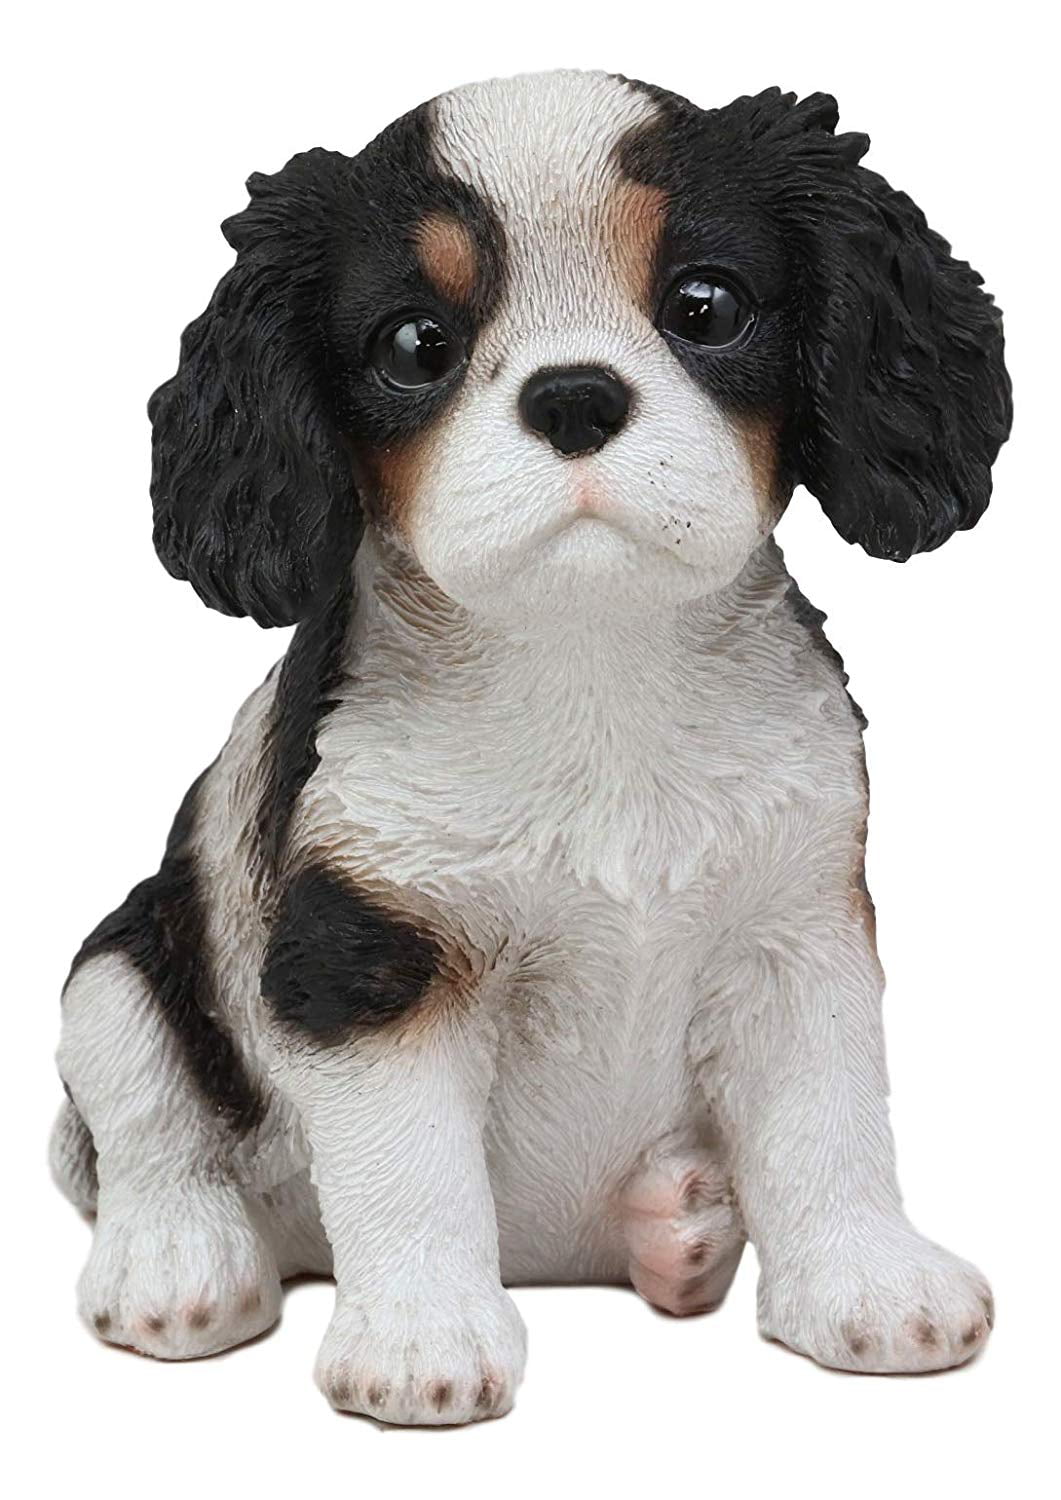 Miniature Dollhouse FAIRY GARDEN Figurine ~ Mini King Charles Spaniel Dog 